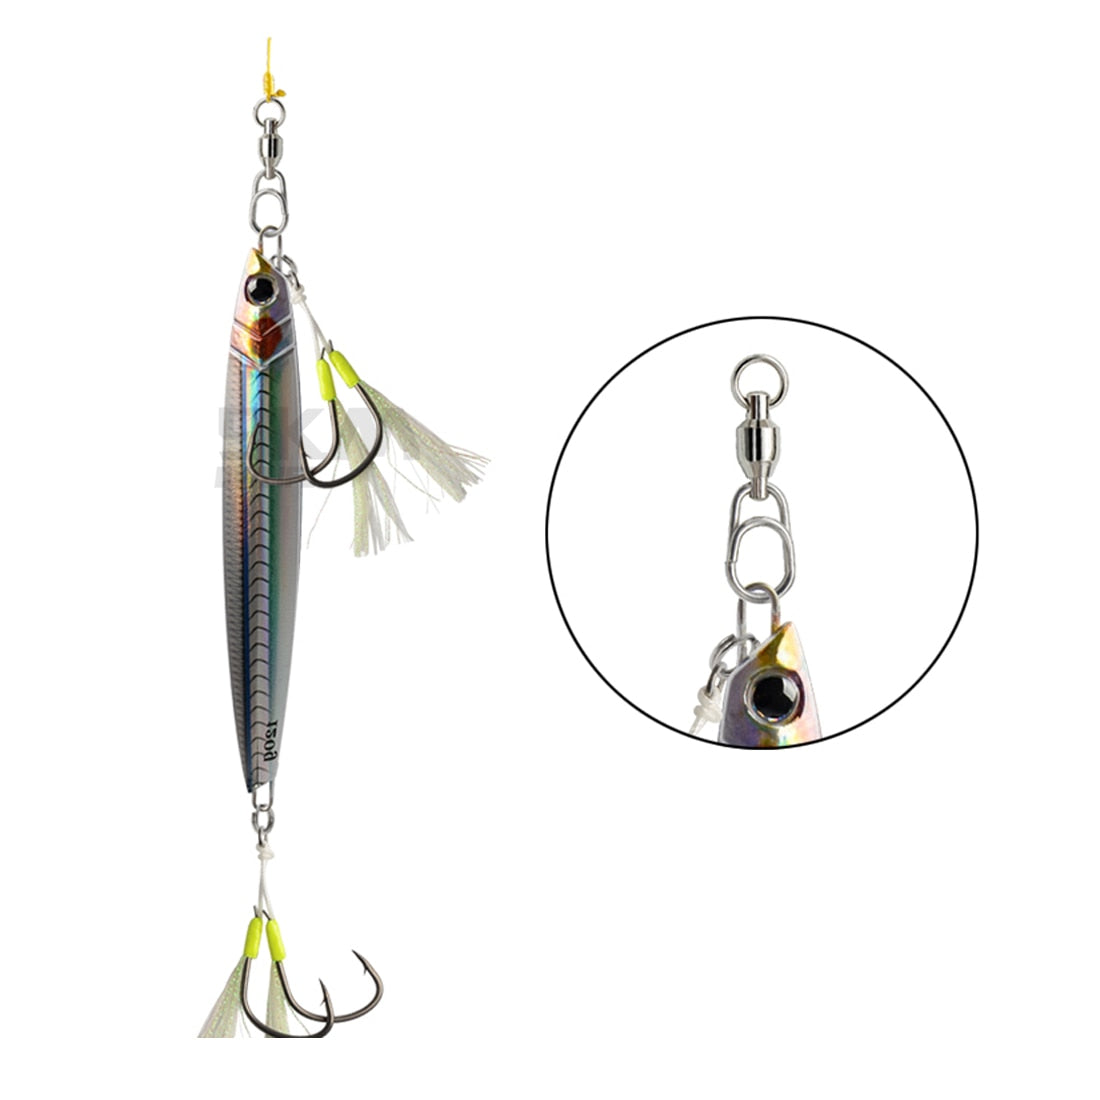 Fishing Tackle Running ledger zip slider beads snap links swivels Float  Adaptors